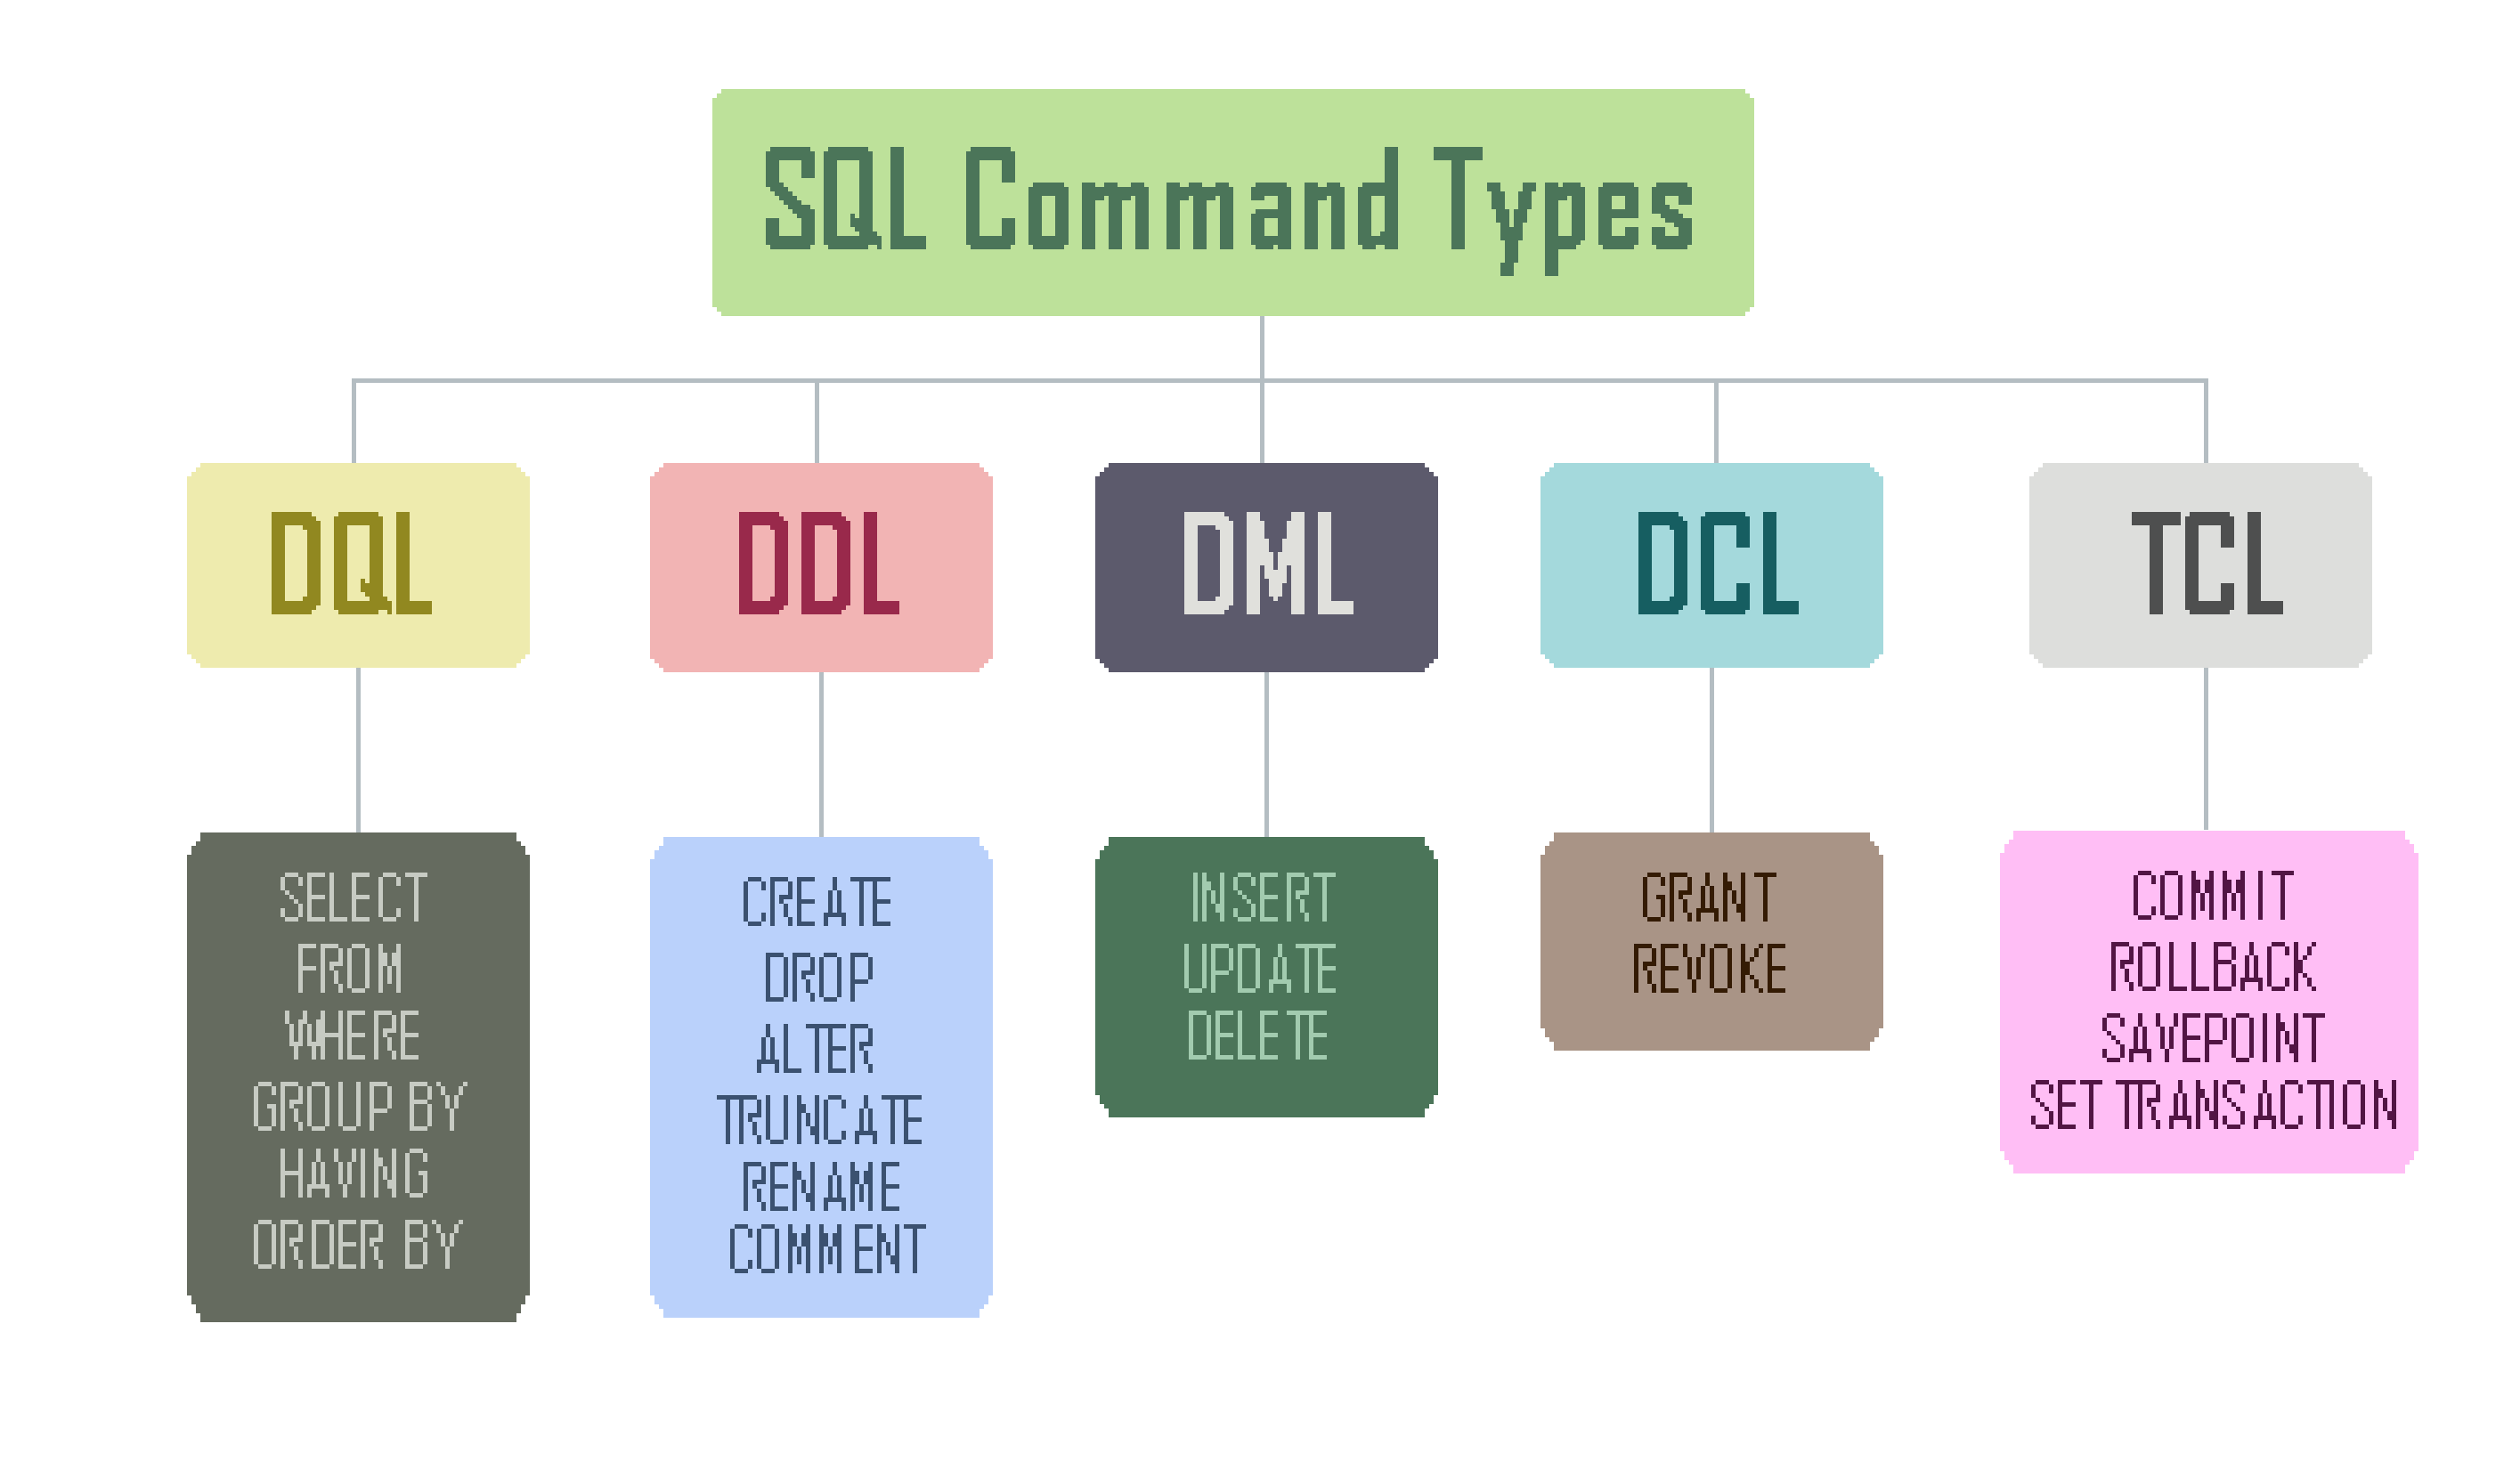 категории команд SQL